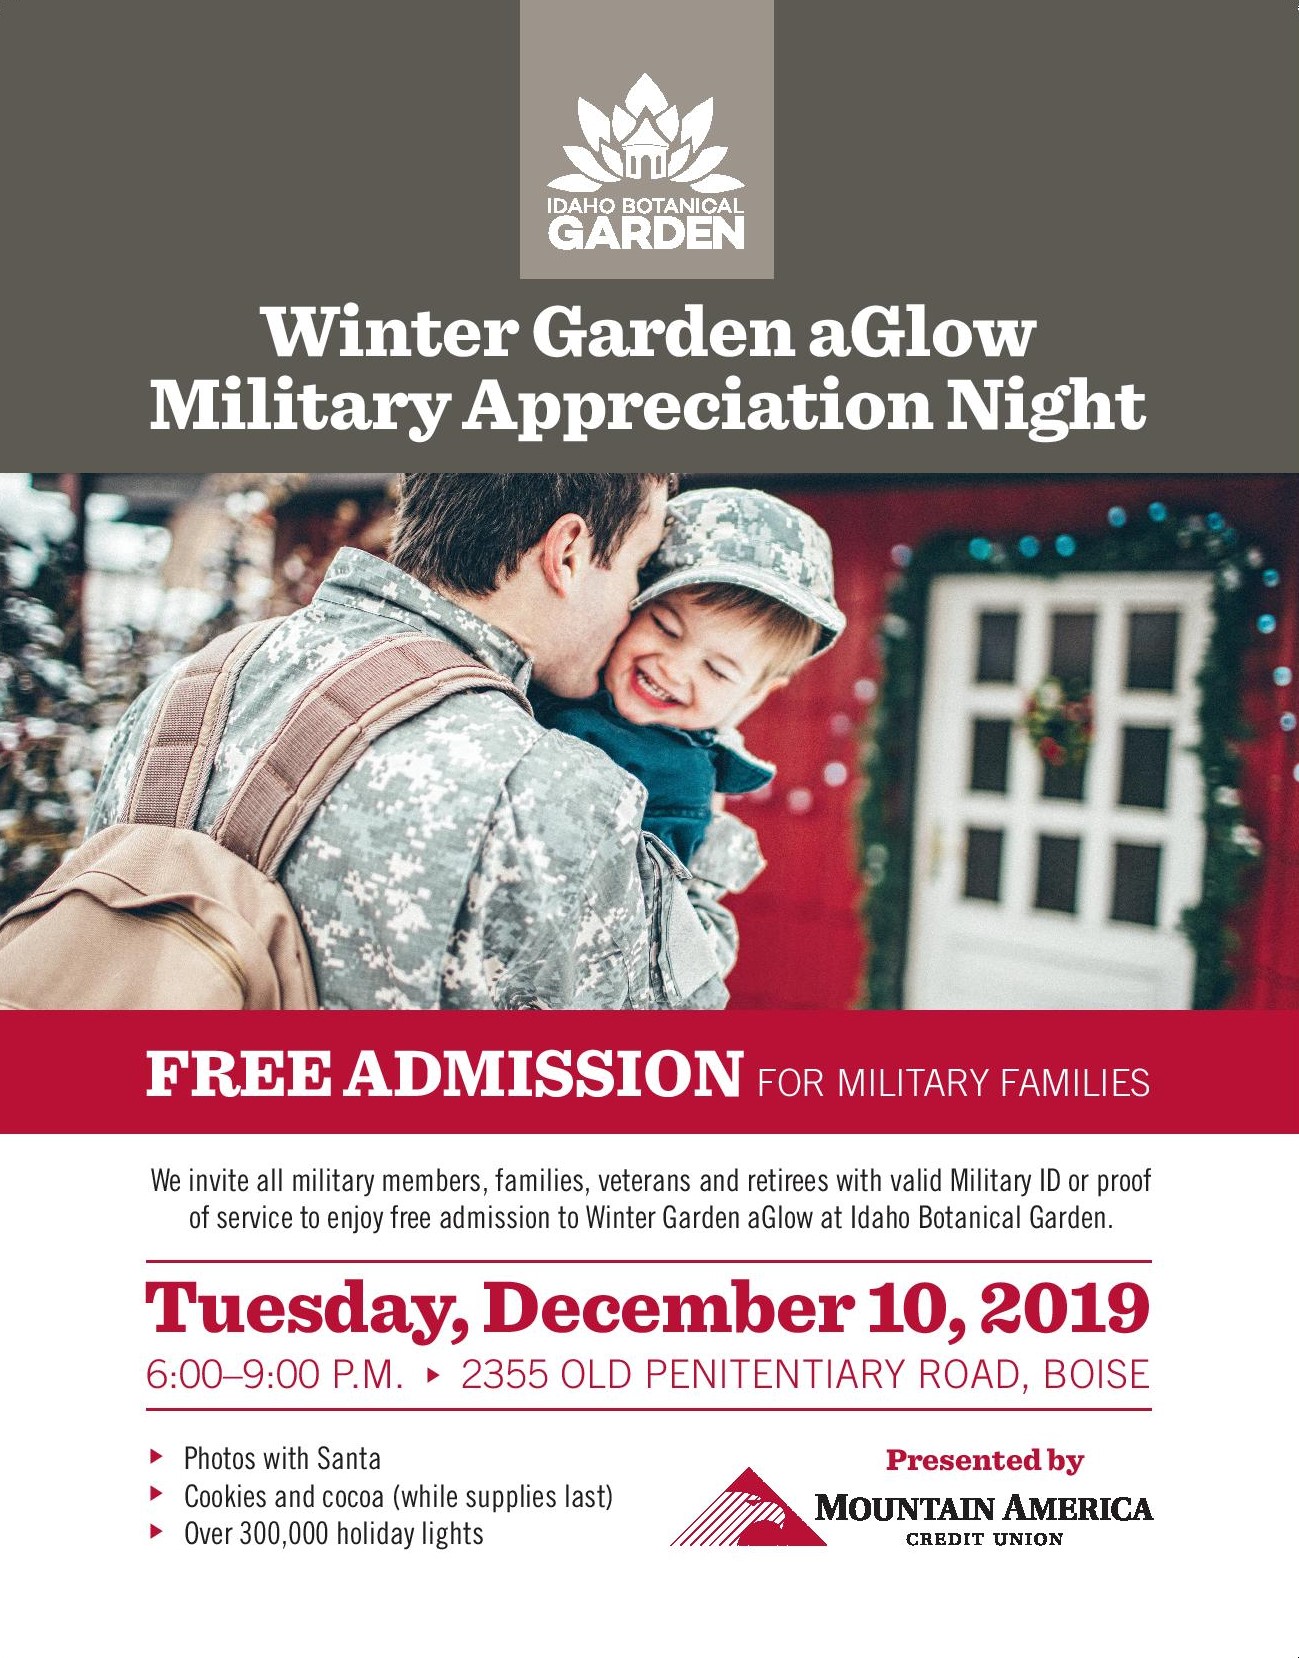 Mountain America Credit Union Presents Military Appreciation Night at Winter Garden aGlow